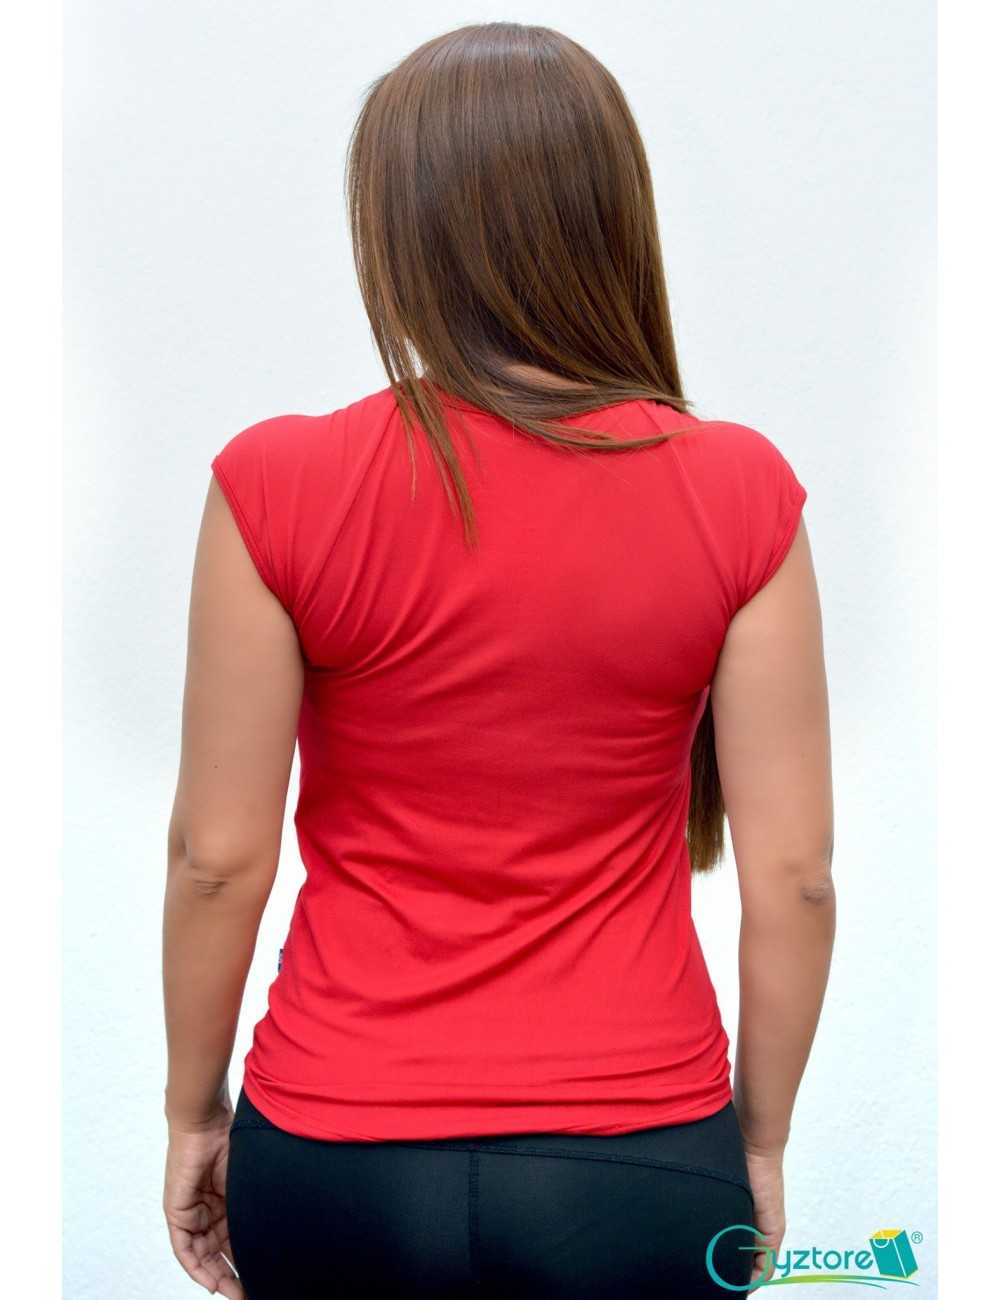 Blusa deportiva manga corta color rojo